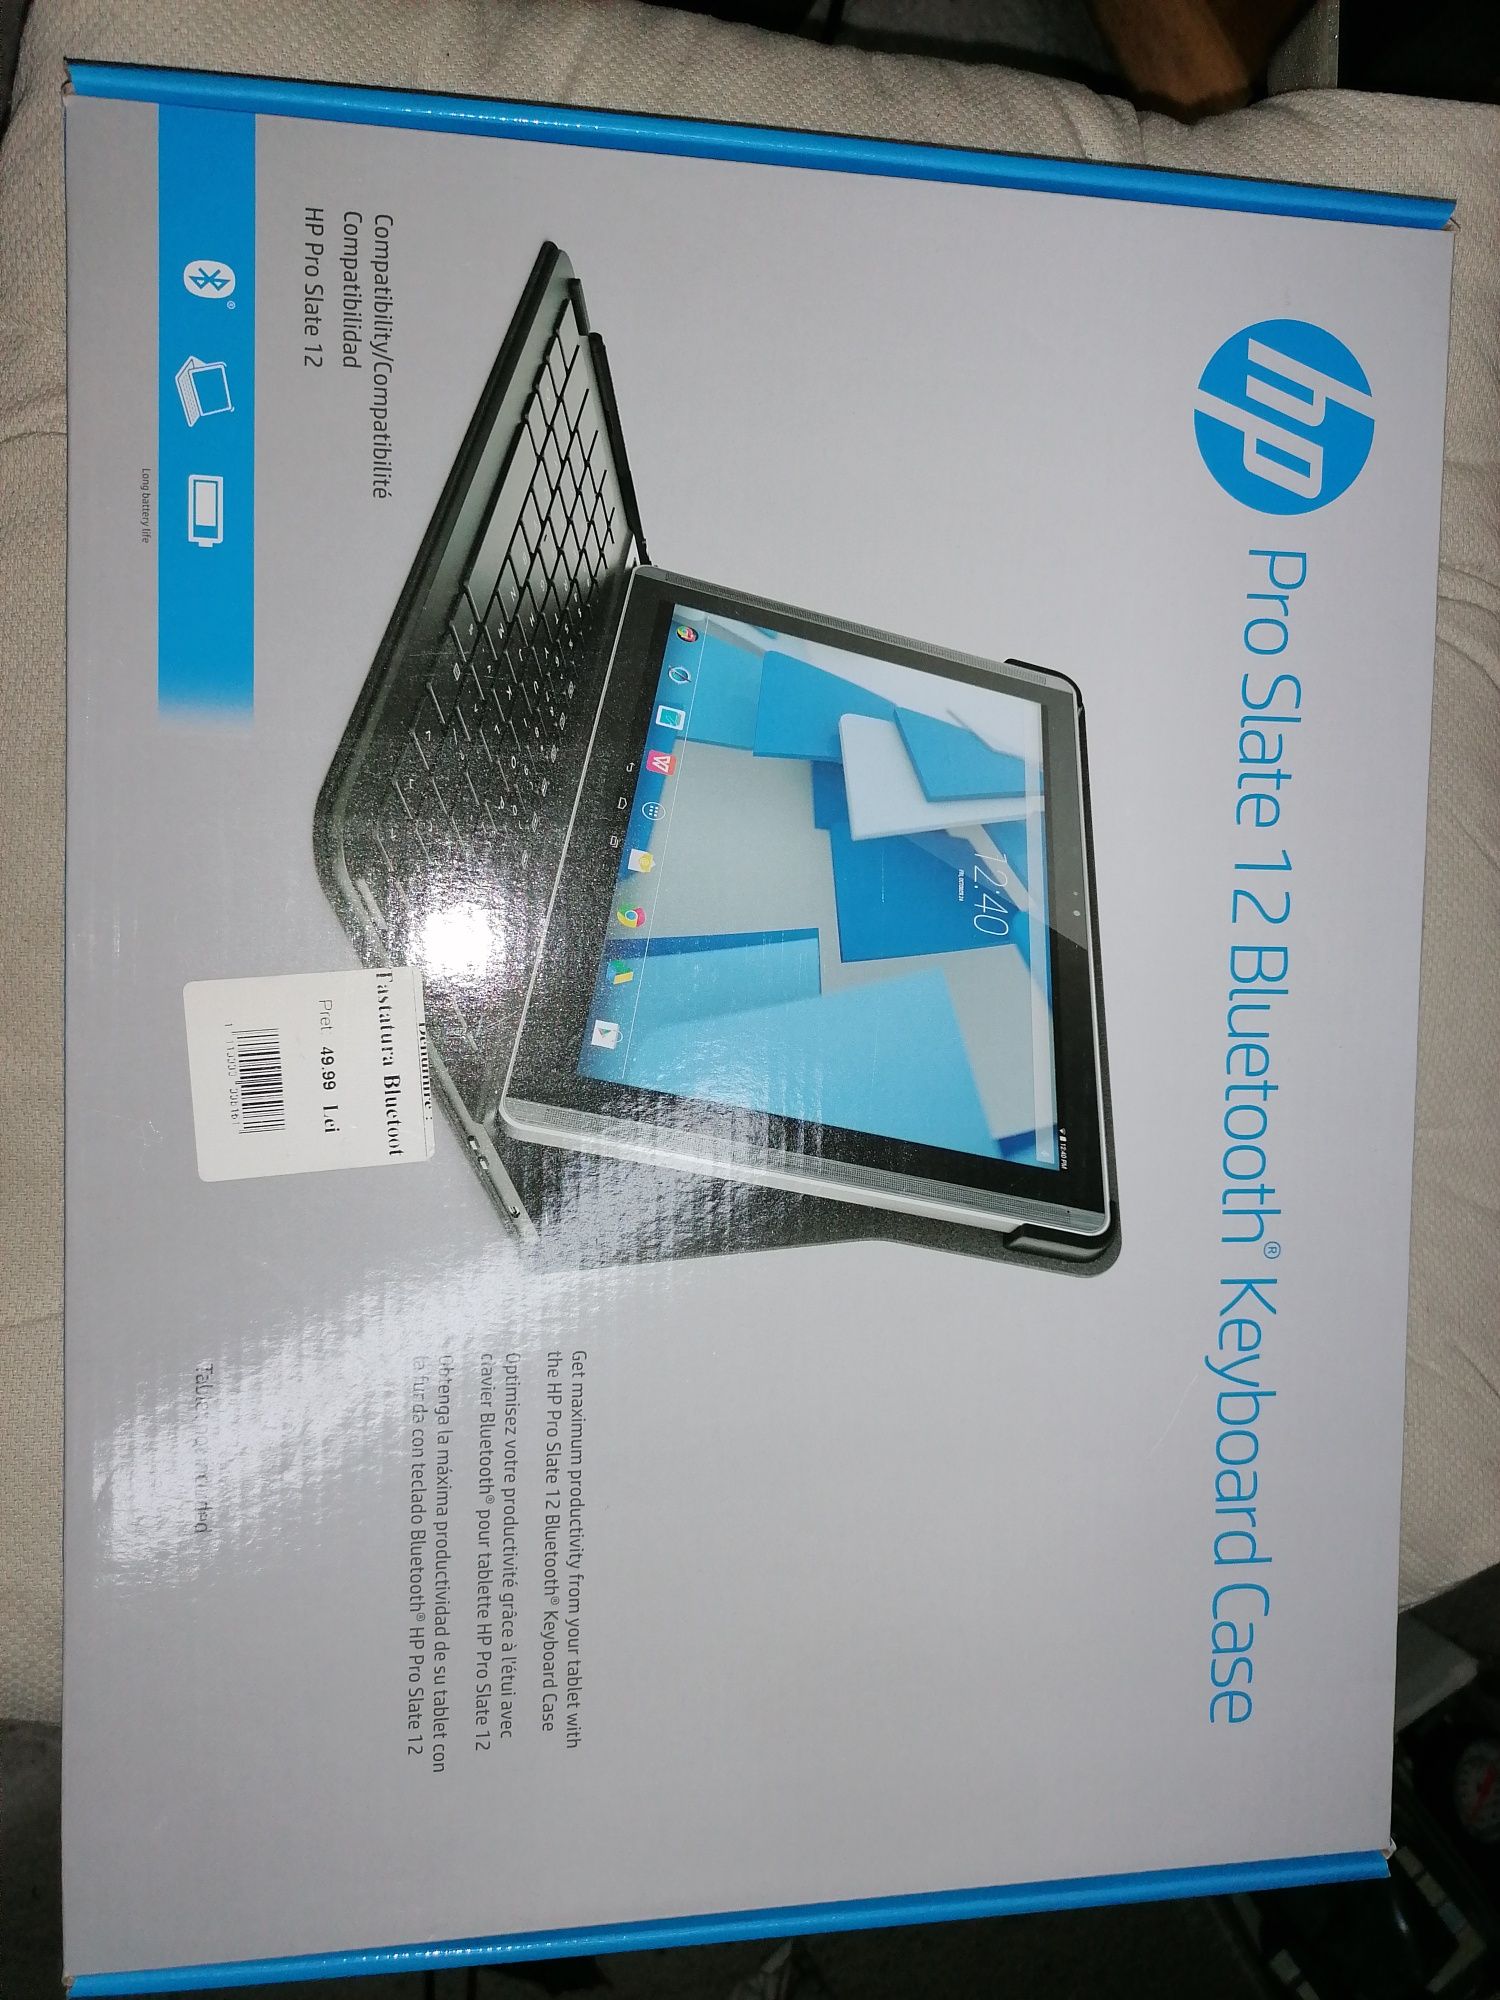 Husa tastatura Bluetooth HP, noua, tastatura wireless tableta sau pc